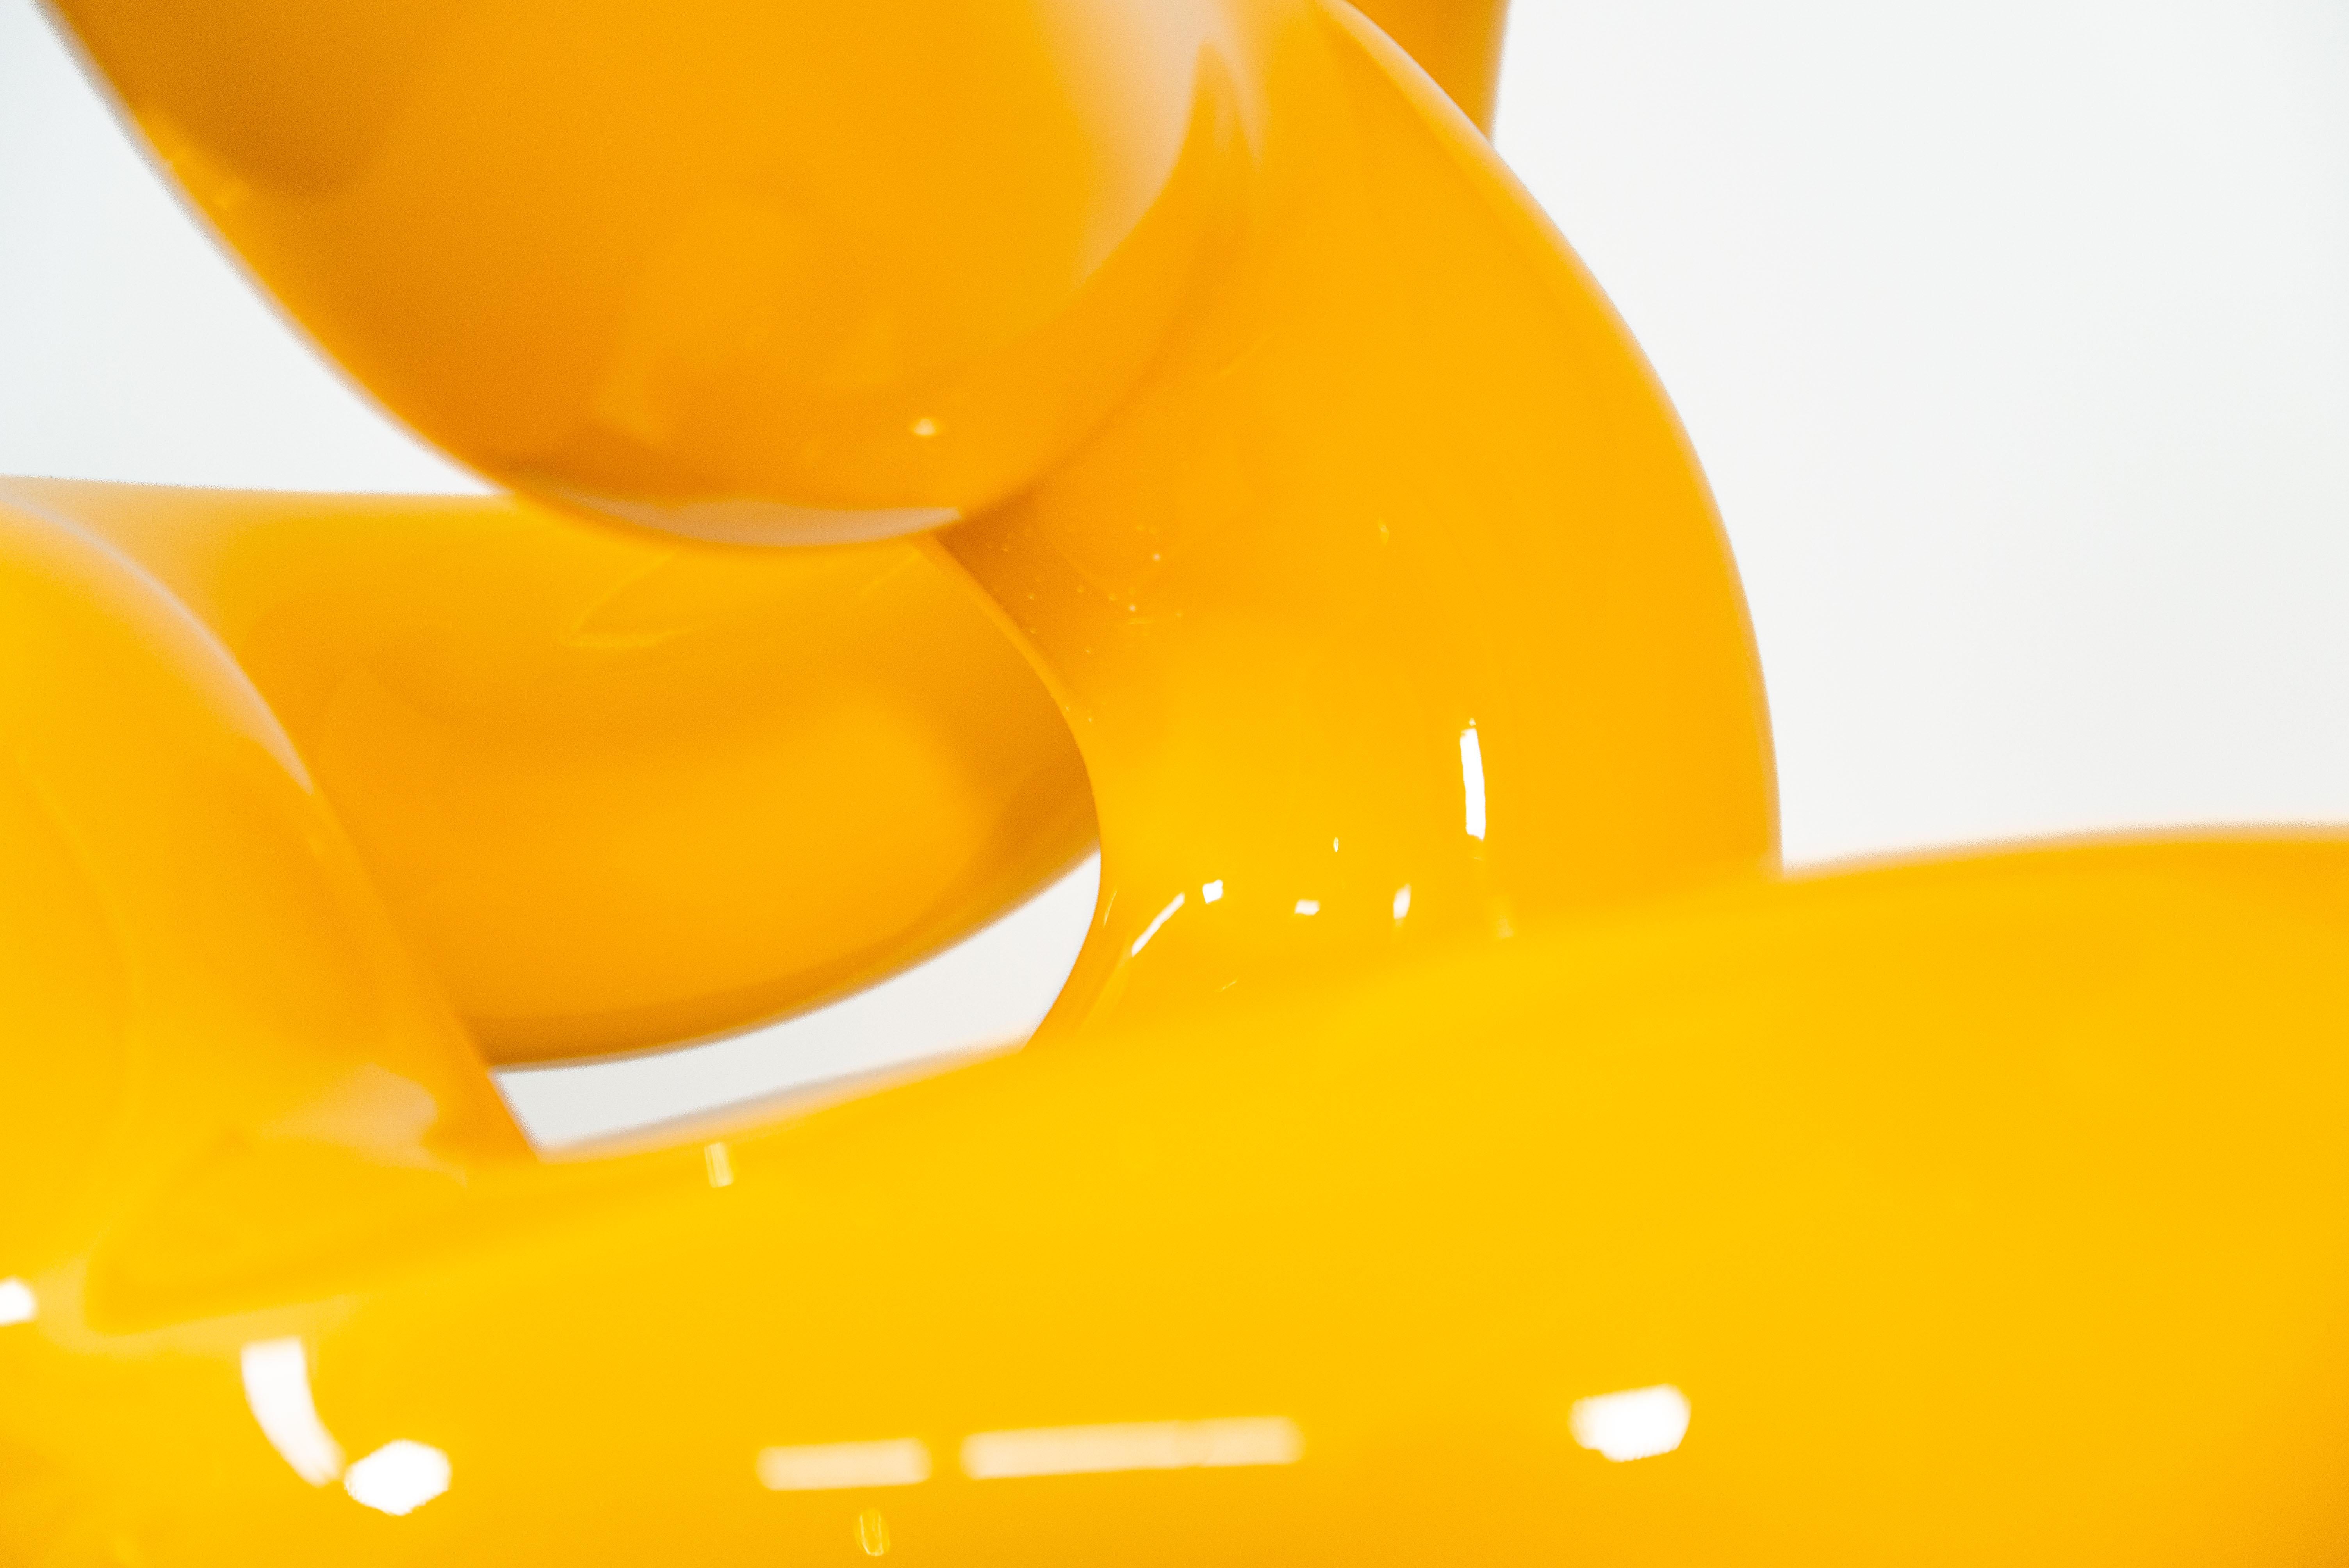 Circuit jaune - sculpture en acier inoxydable poli, abstraite et peinte en vente 3